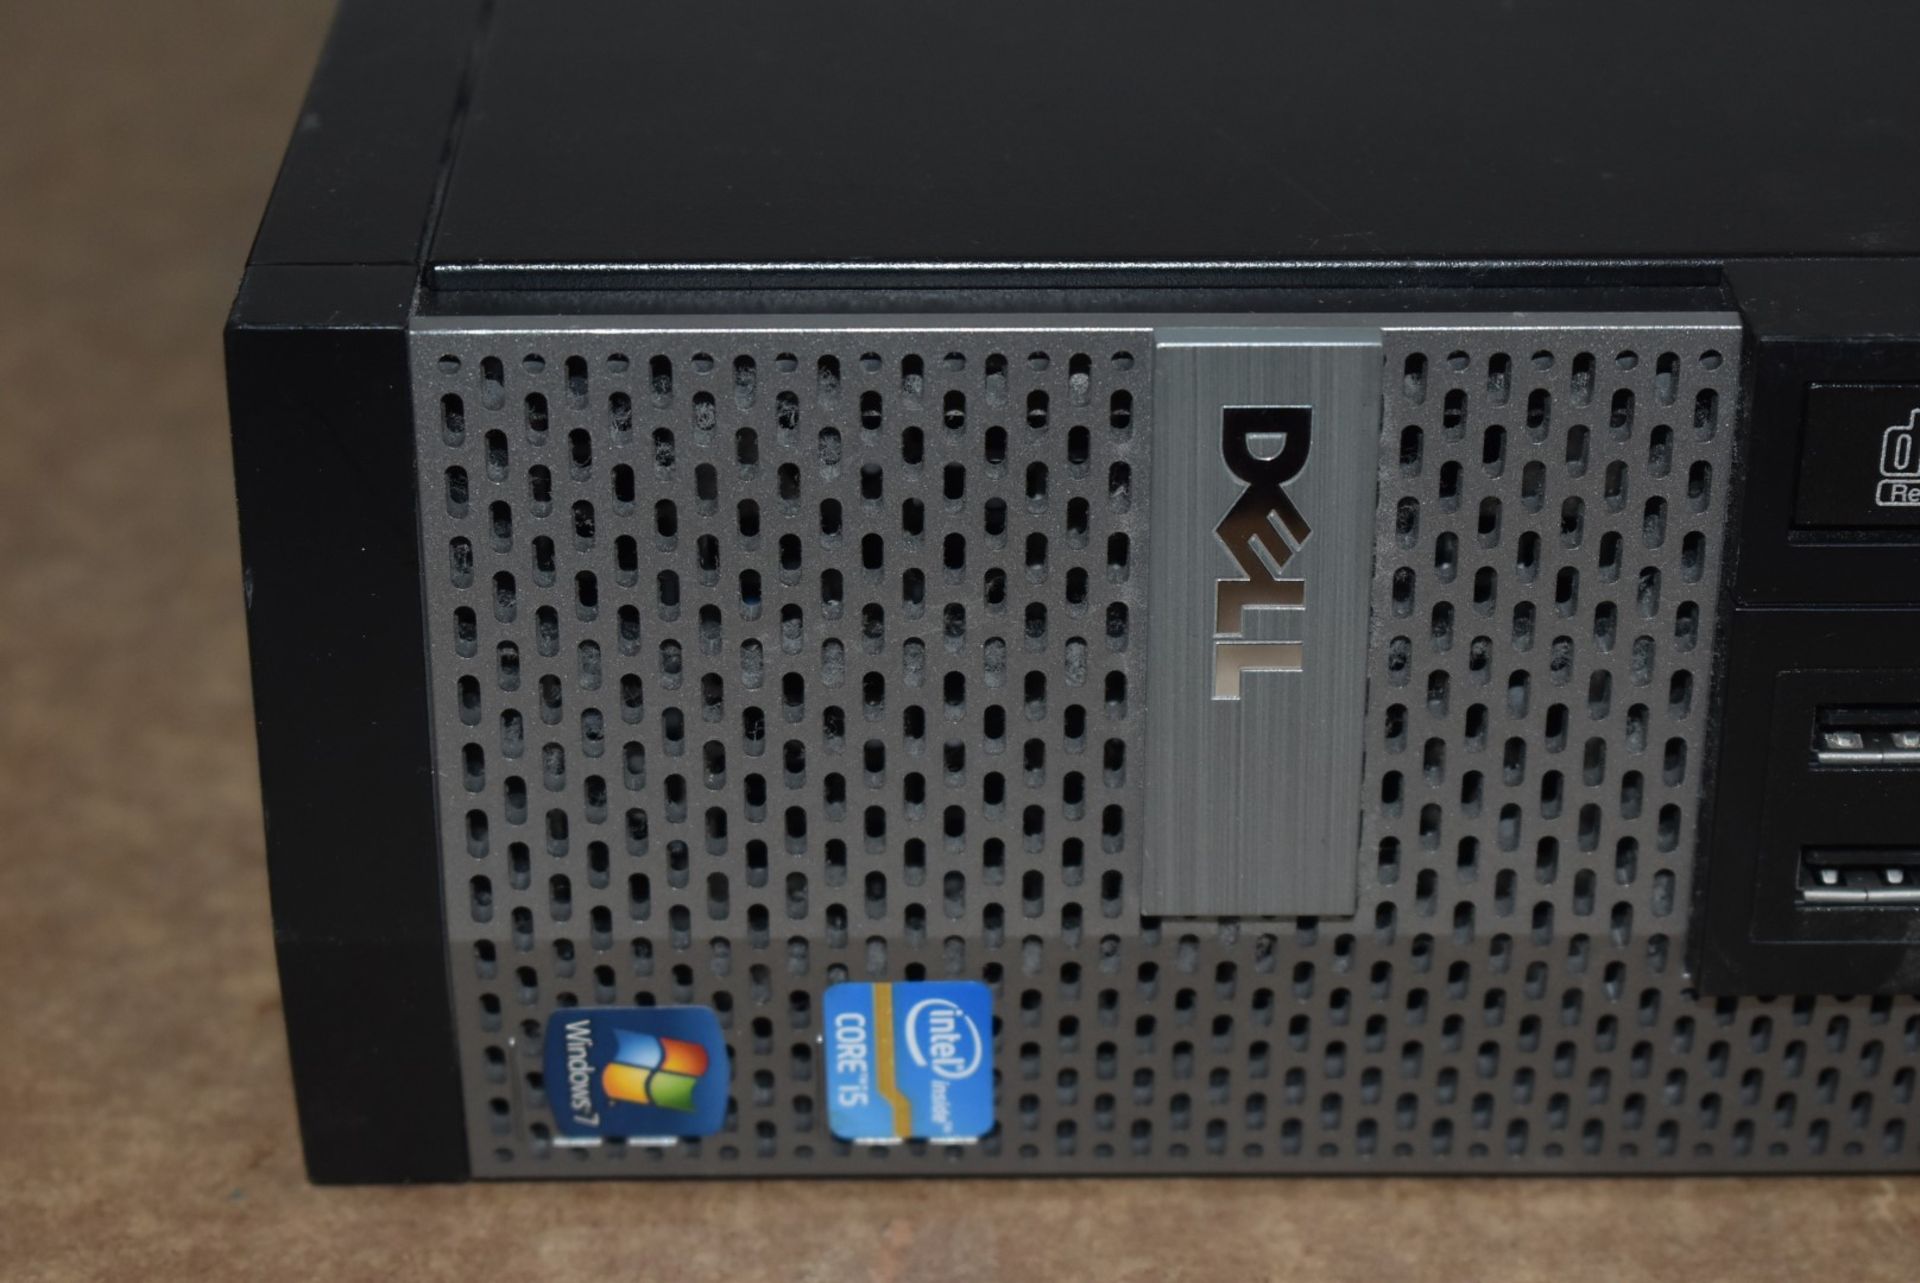 1 x Dell OptiPlex 7010 SFF Desktop PC Featuring an Intel i5-5470 Processor and 4gb Ram - Hard - Image 8 of 8